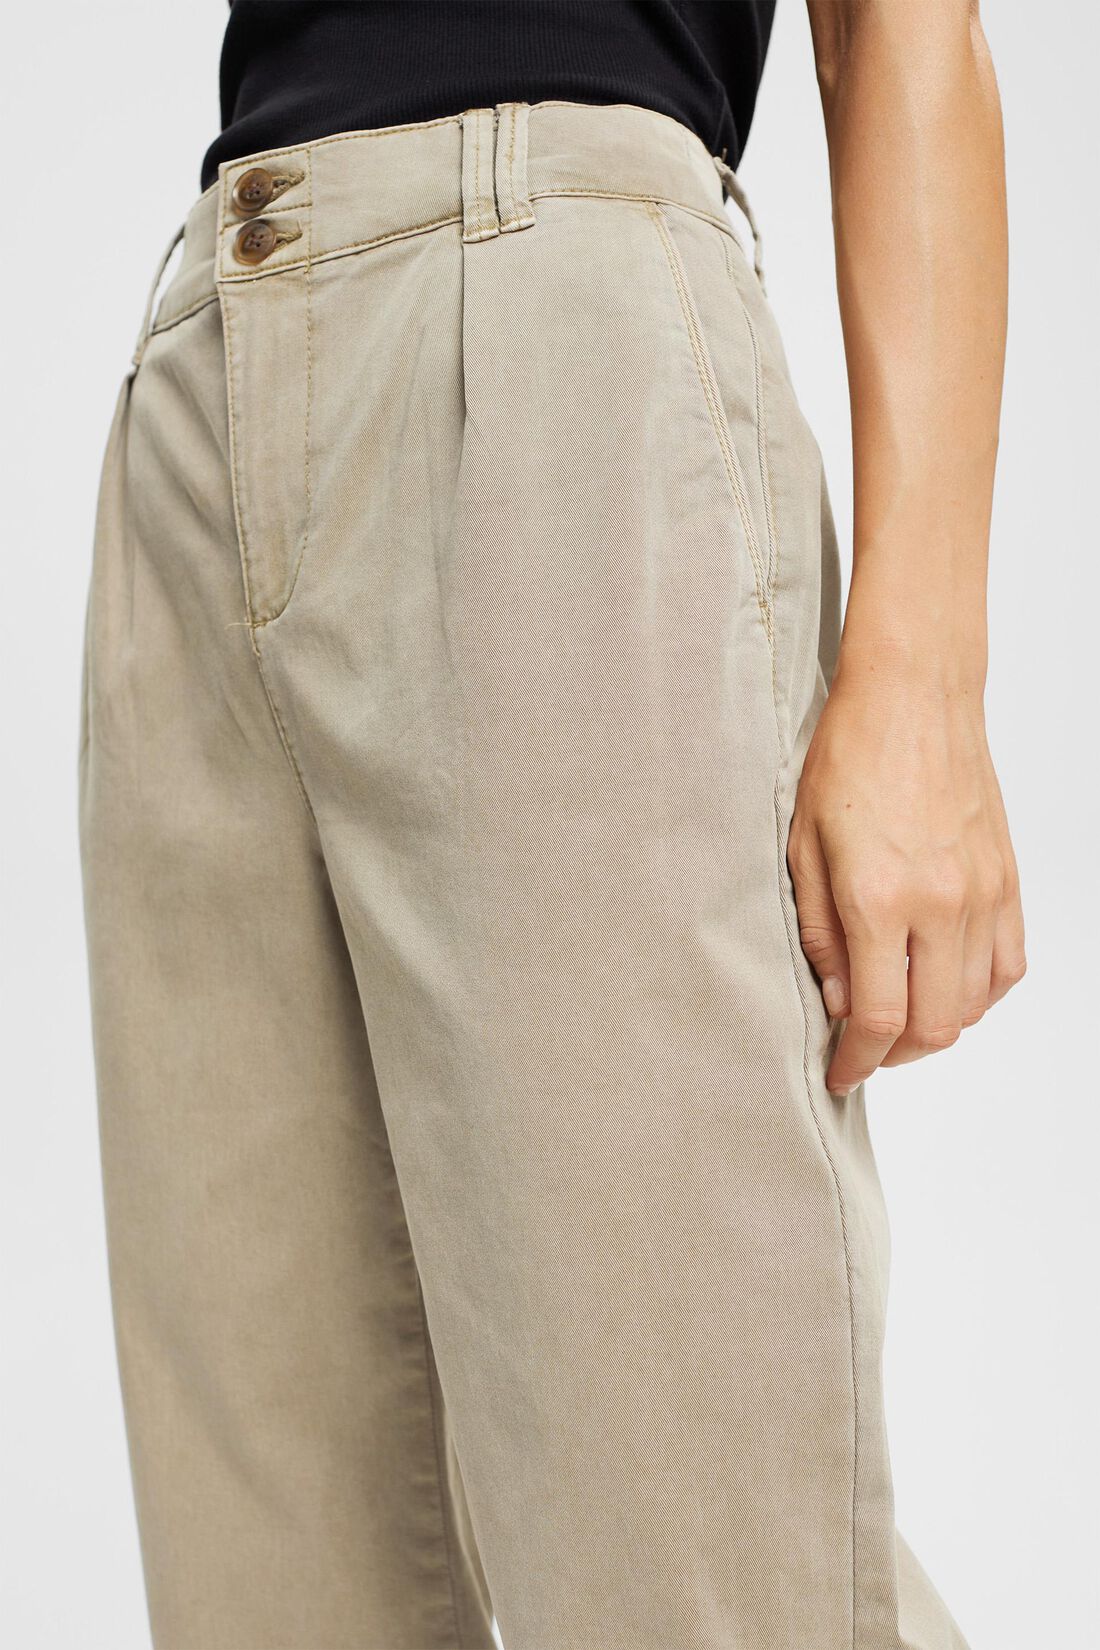 GapFlex Twill Pants in Slim Stretch | Gap Factory